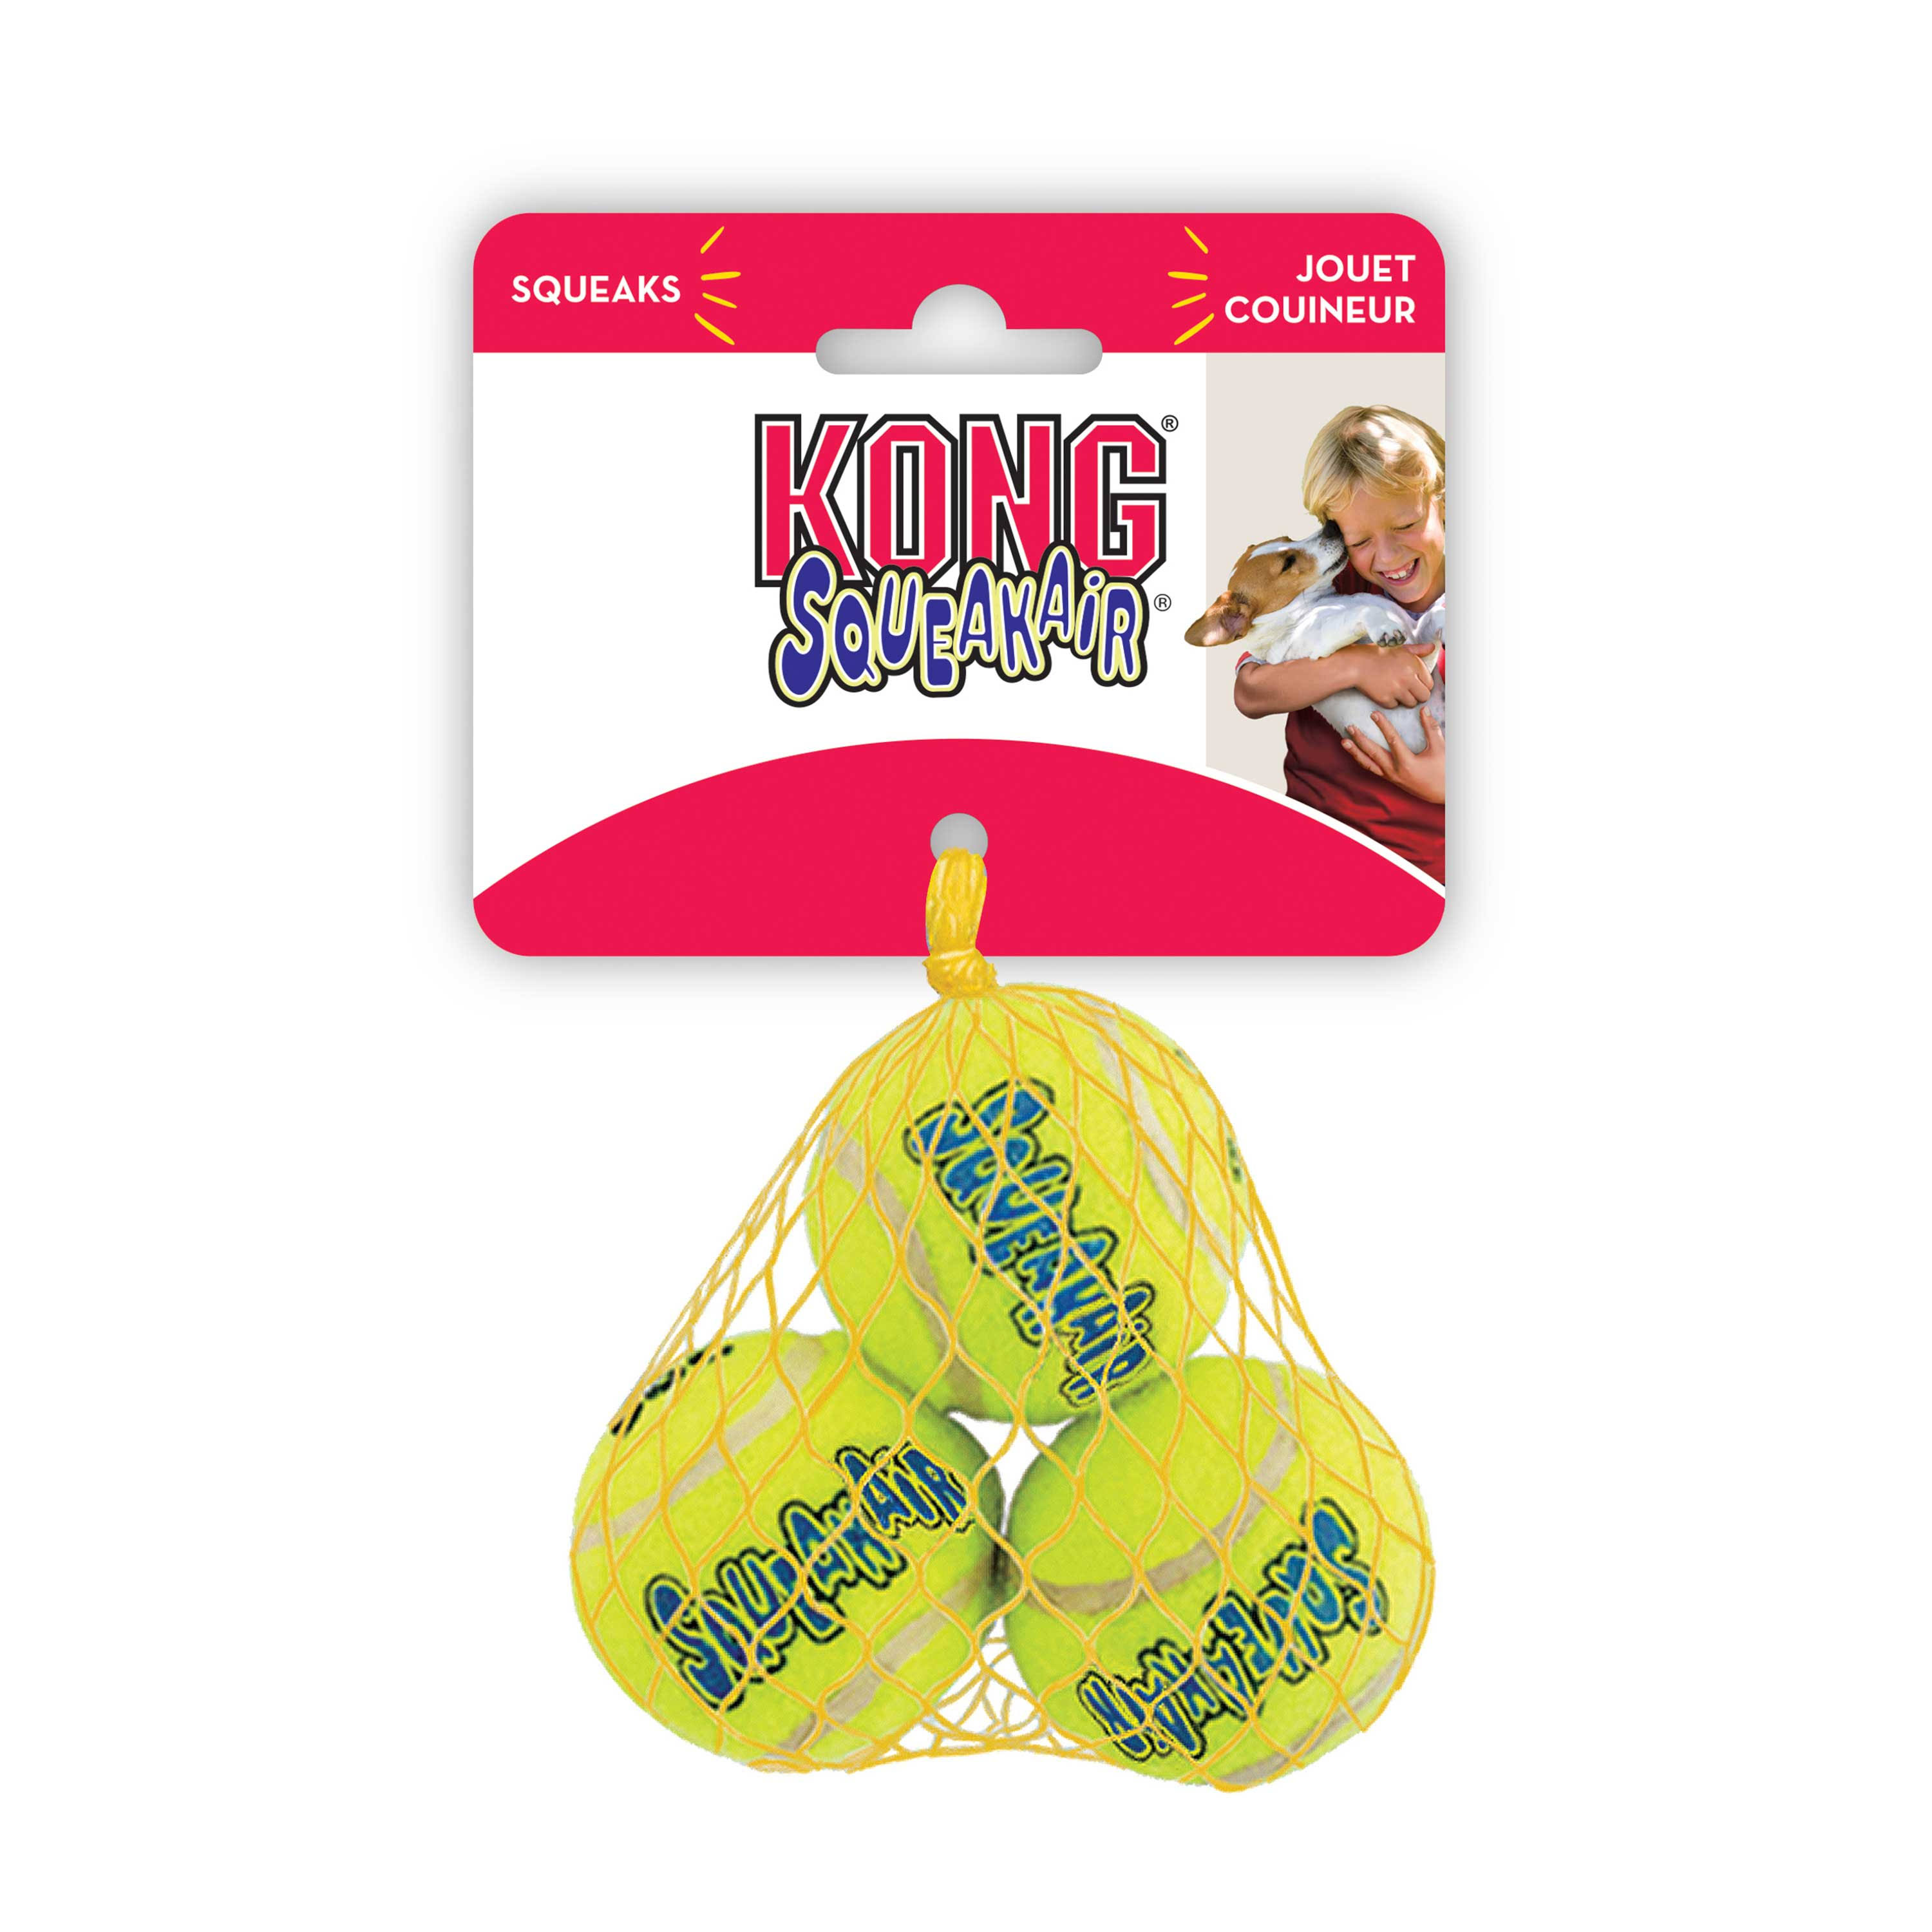 Kong Air Dog Squeaker Tennis Ball - Yellow, X-Small, 3 Pack